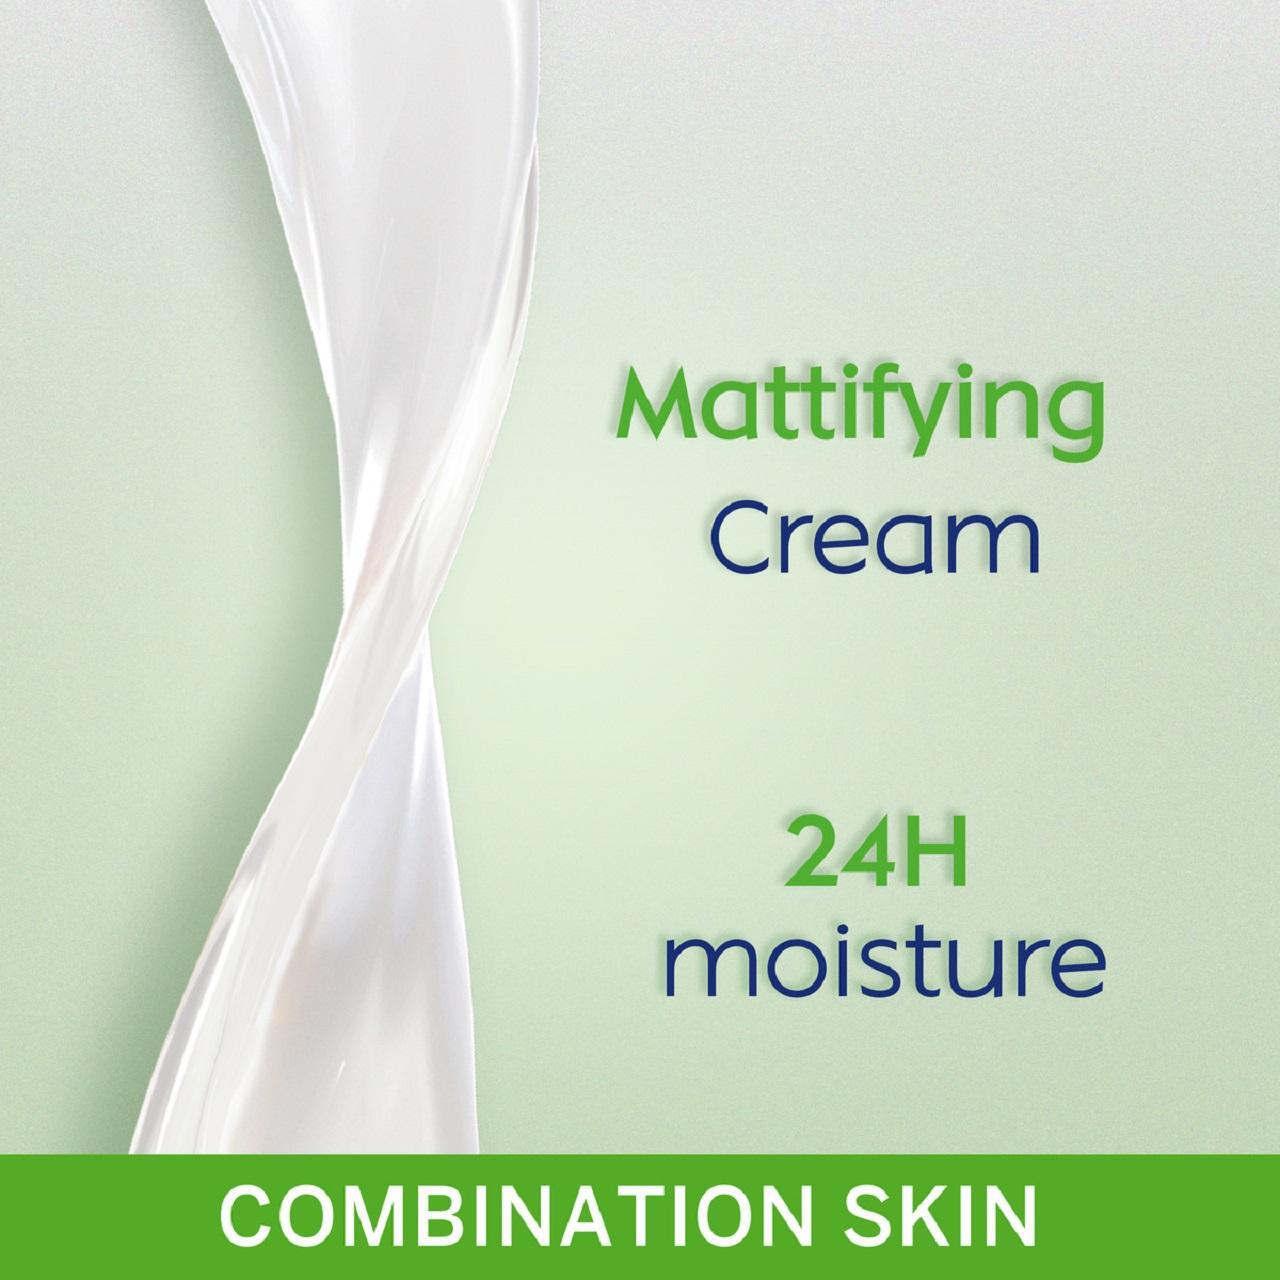 NIVEA Day Cream Face Moisturiser for Combination Skin 50ml